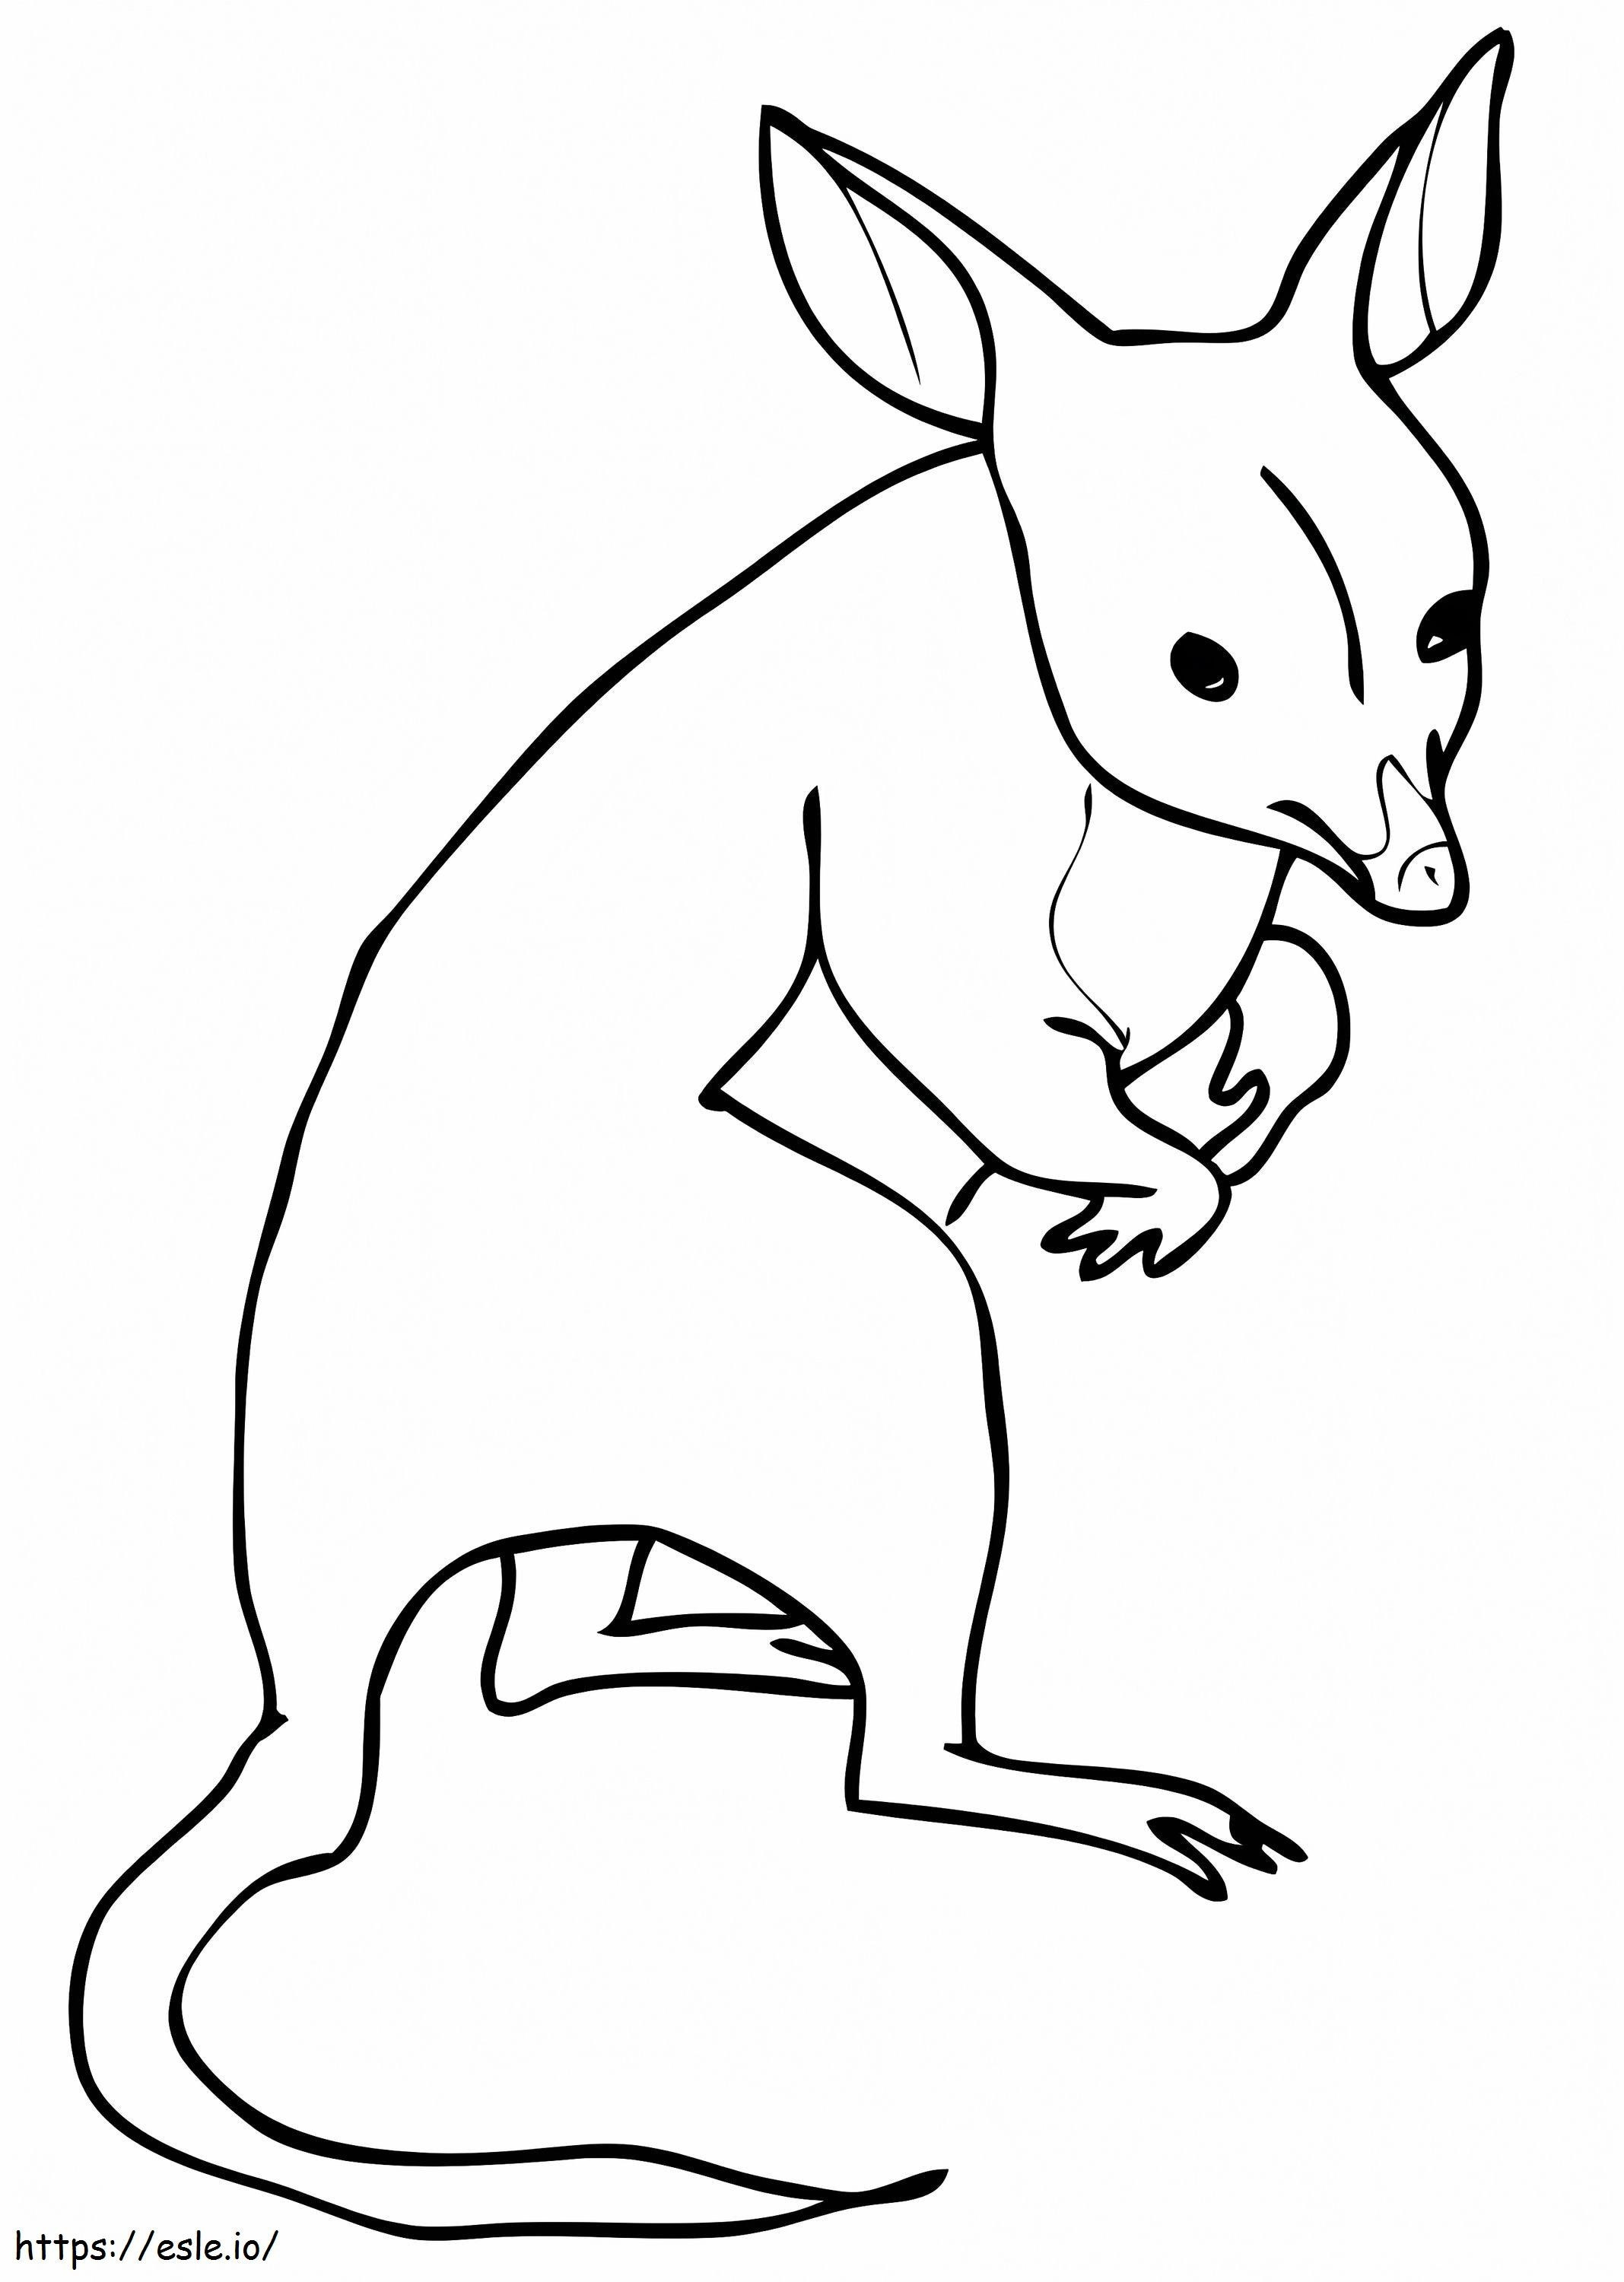 Australia Bandicoot coloring page